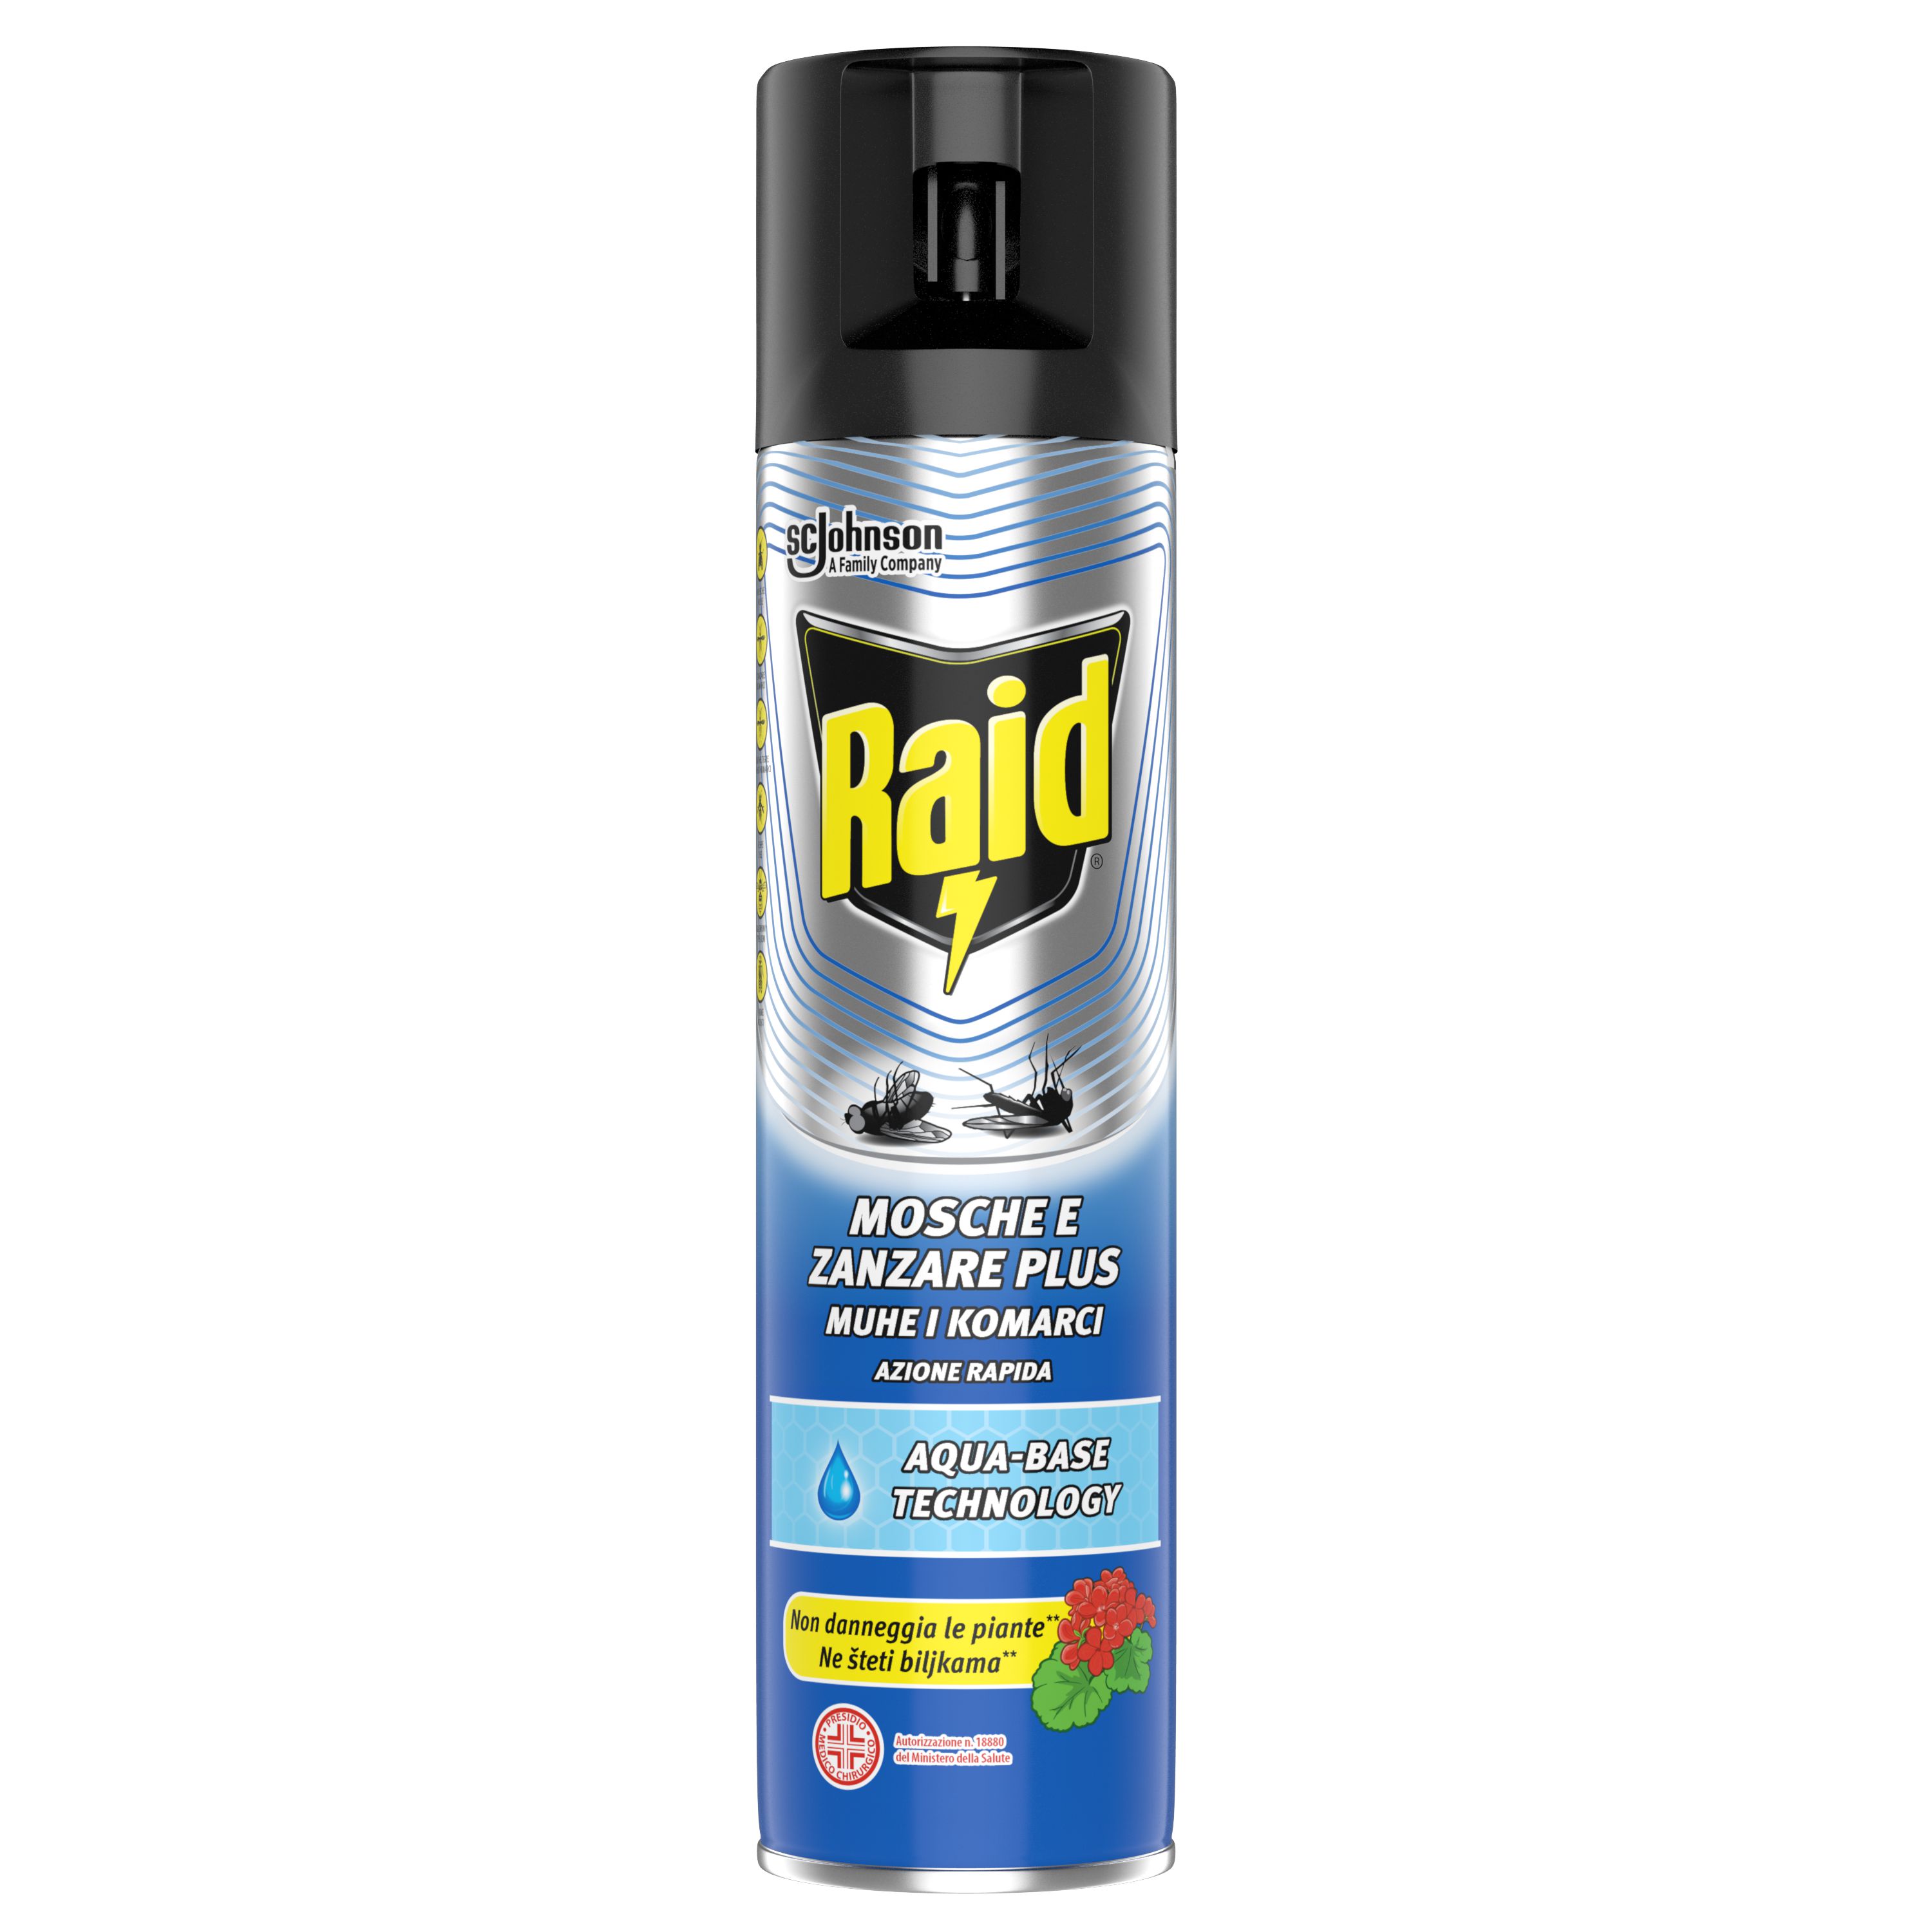 Raid® Spray Aqua-Base Technology